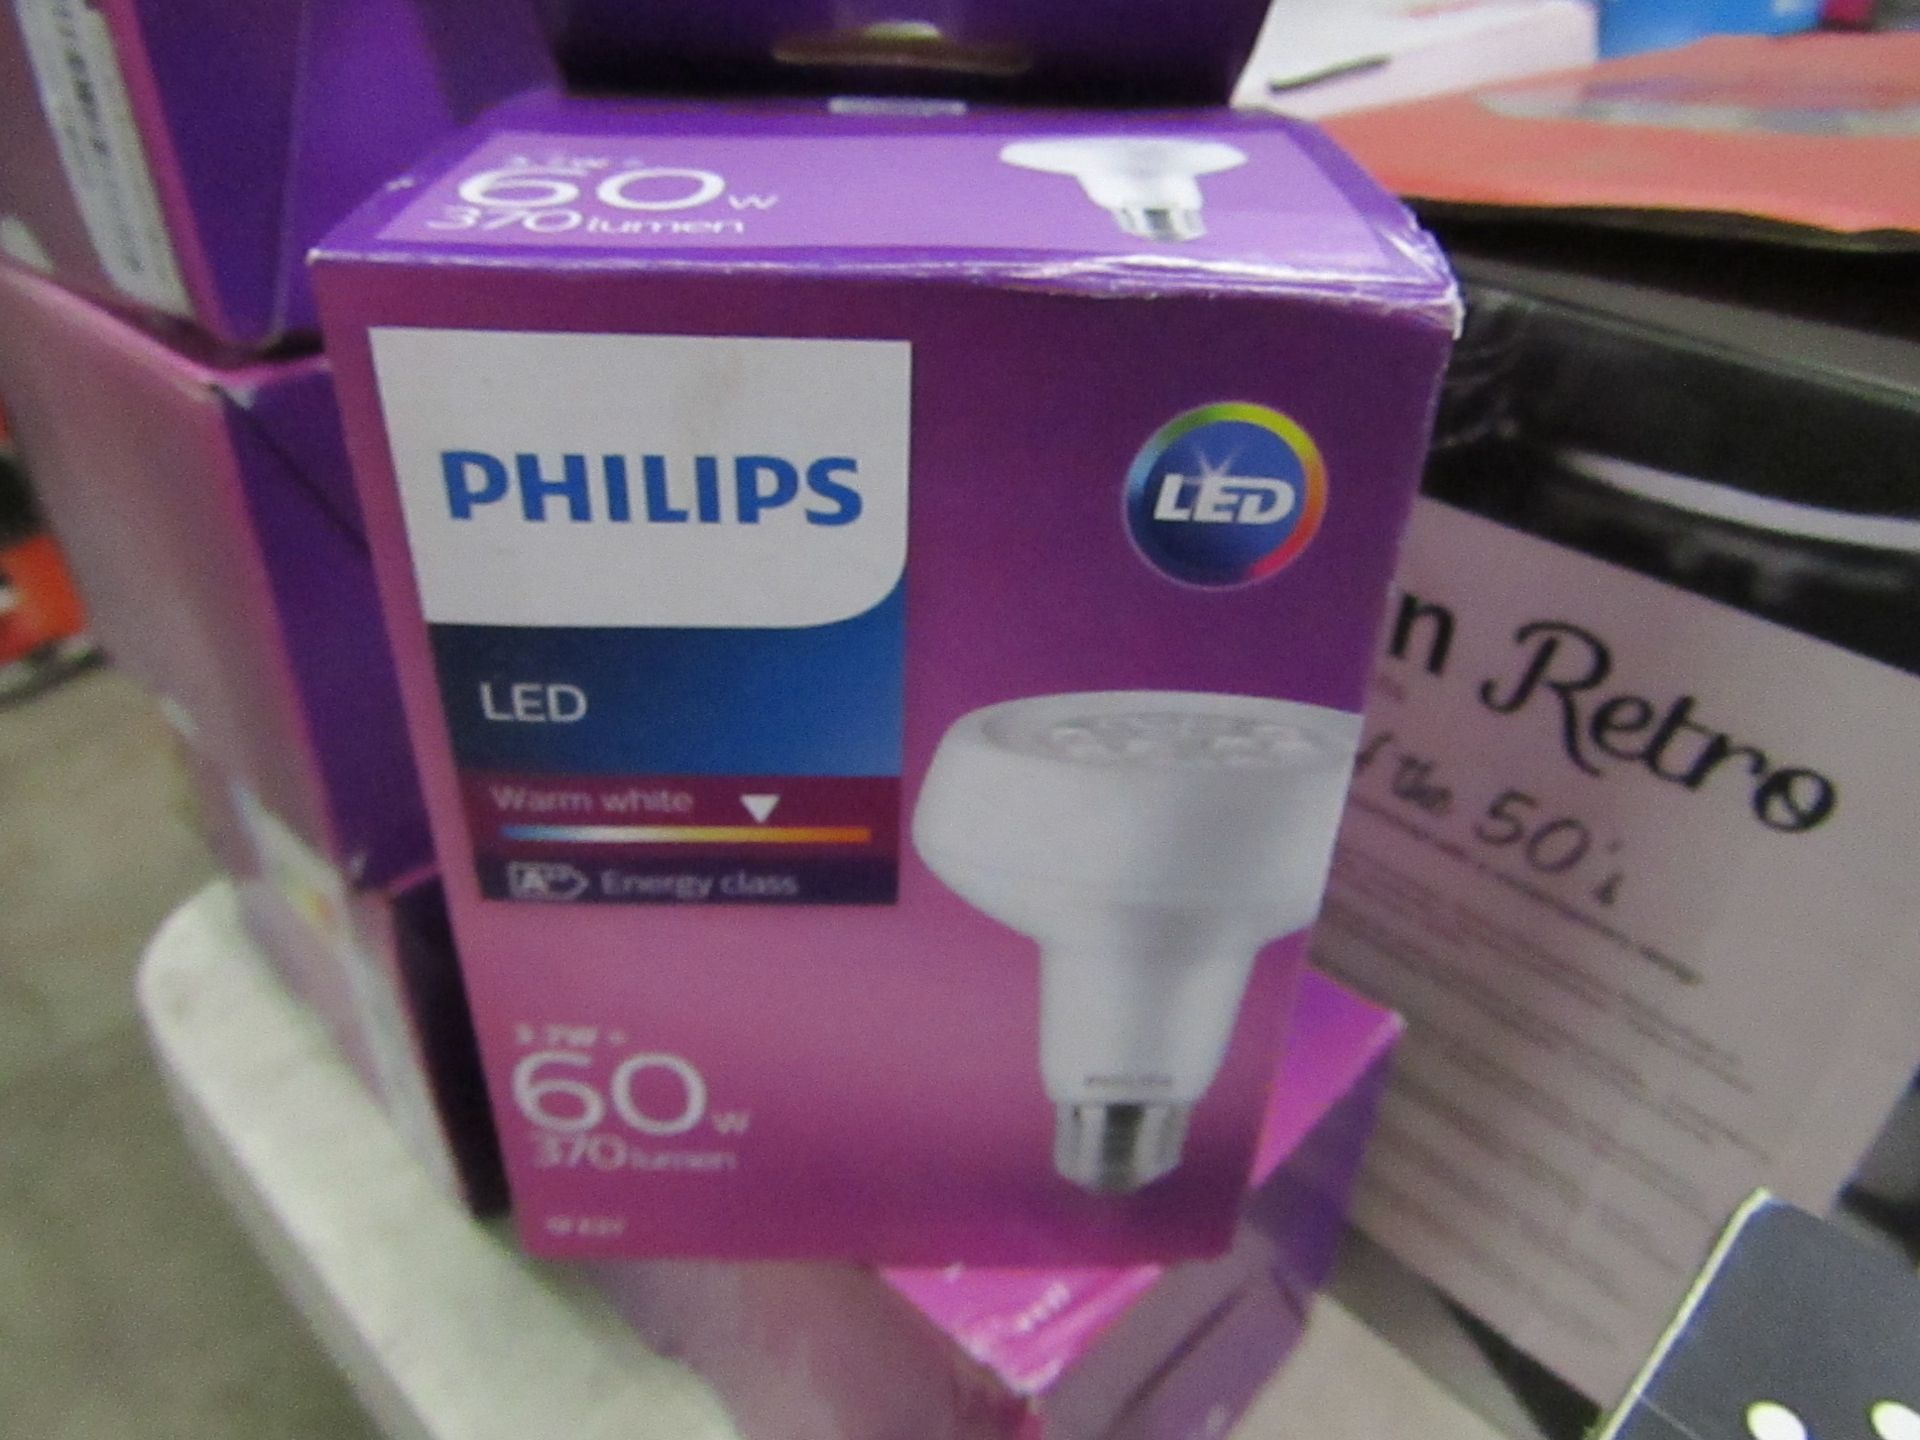 1x Phillips E27 LED Bulb, New, RROP £10.82